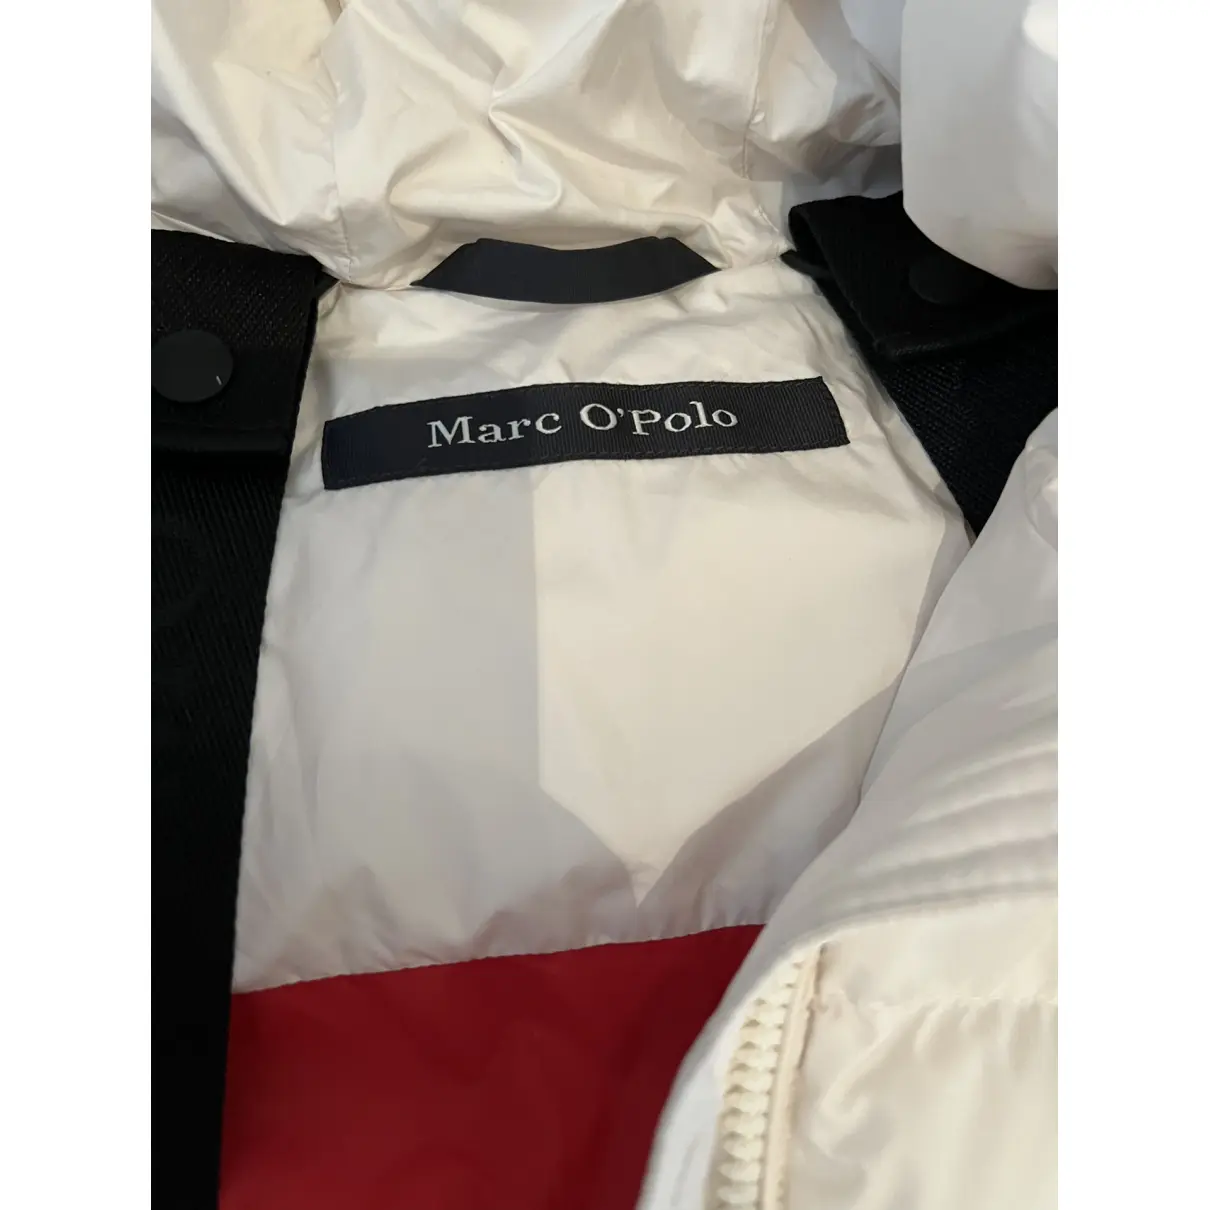 Buy MARC O'POLO Coat online